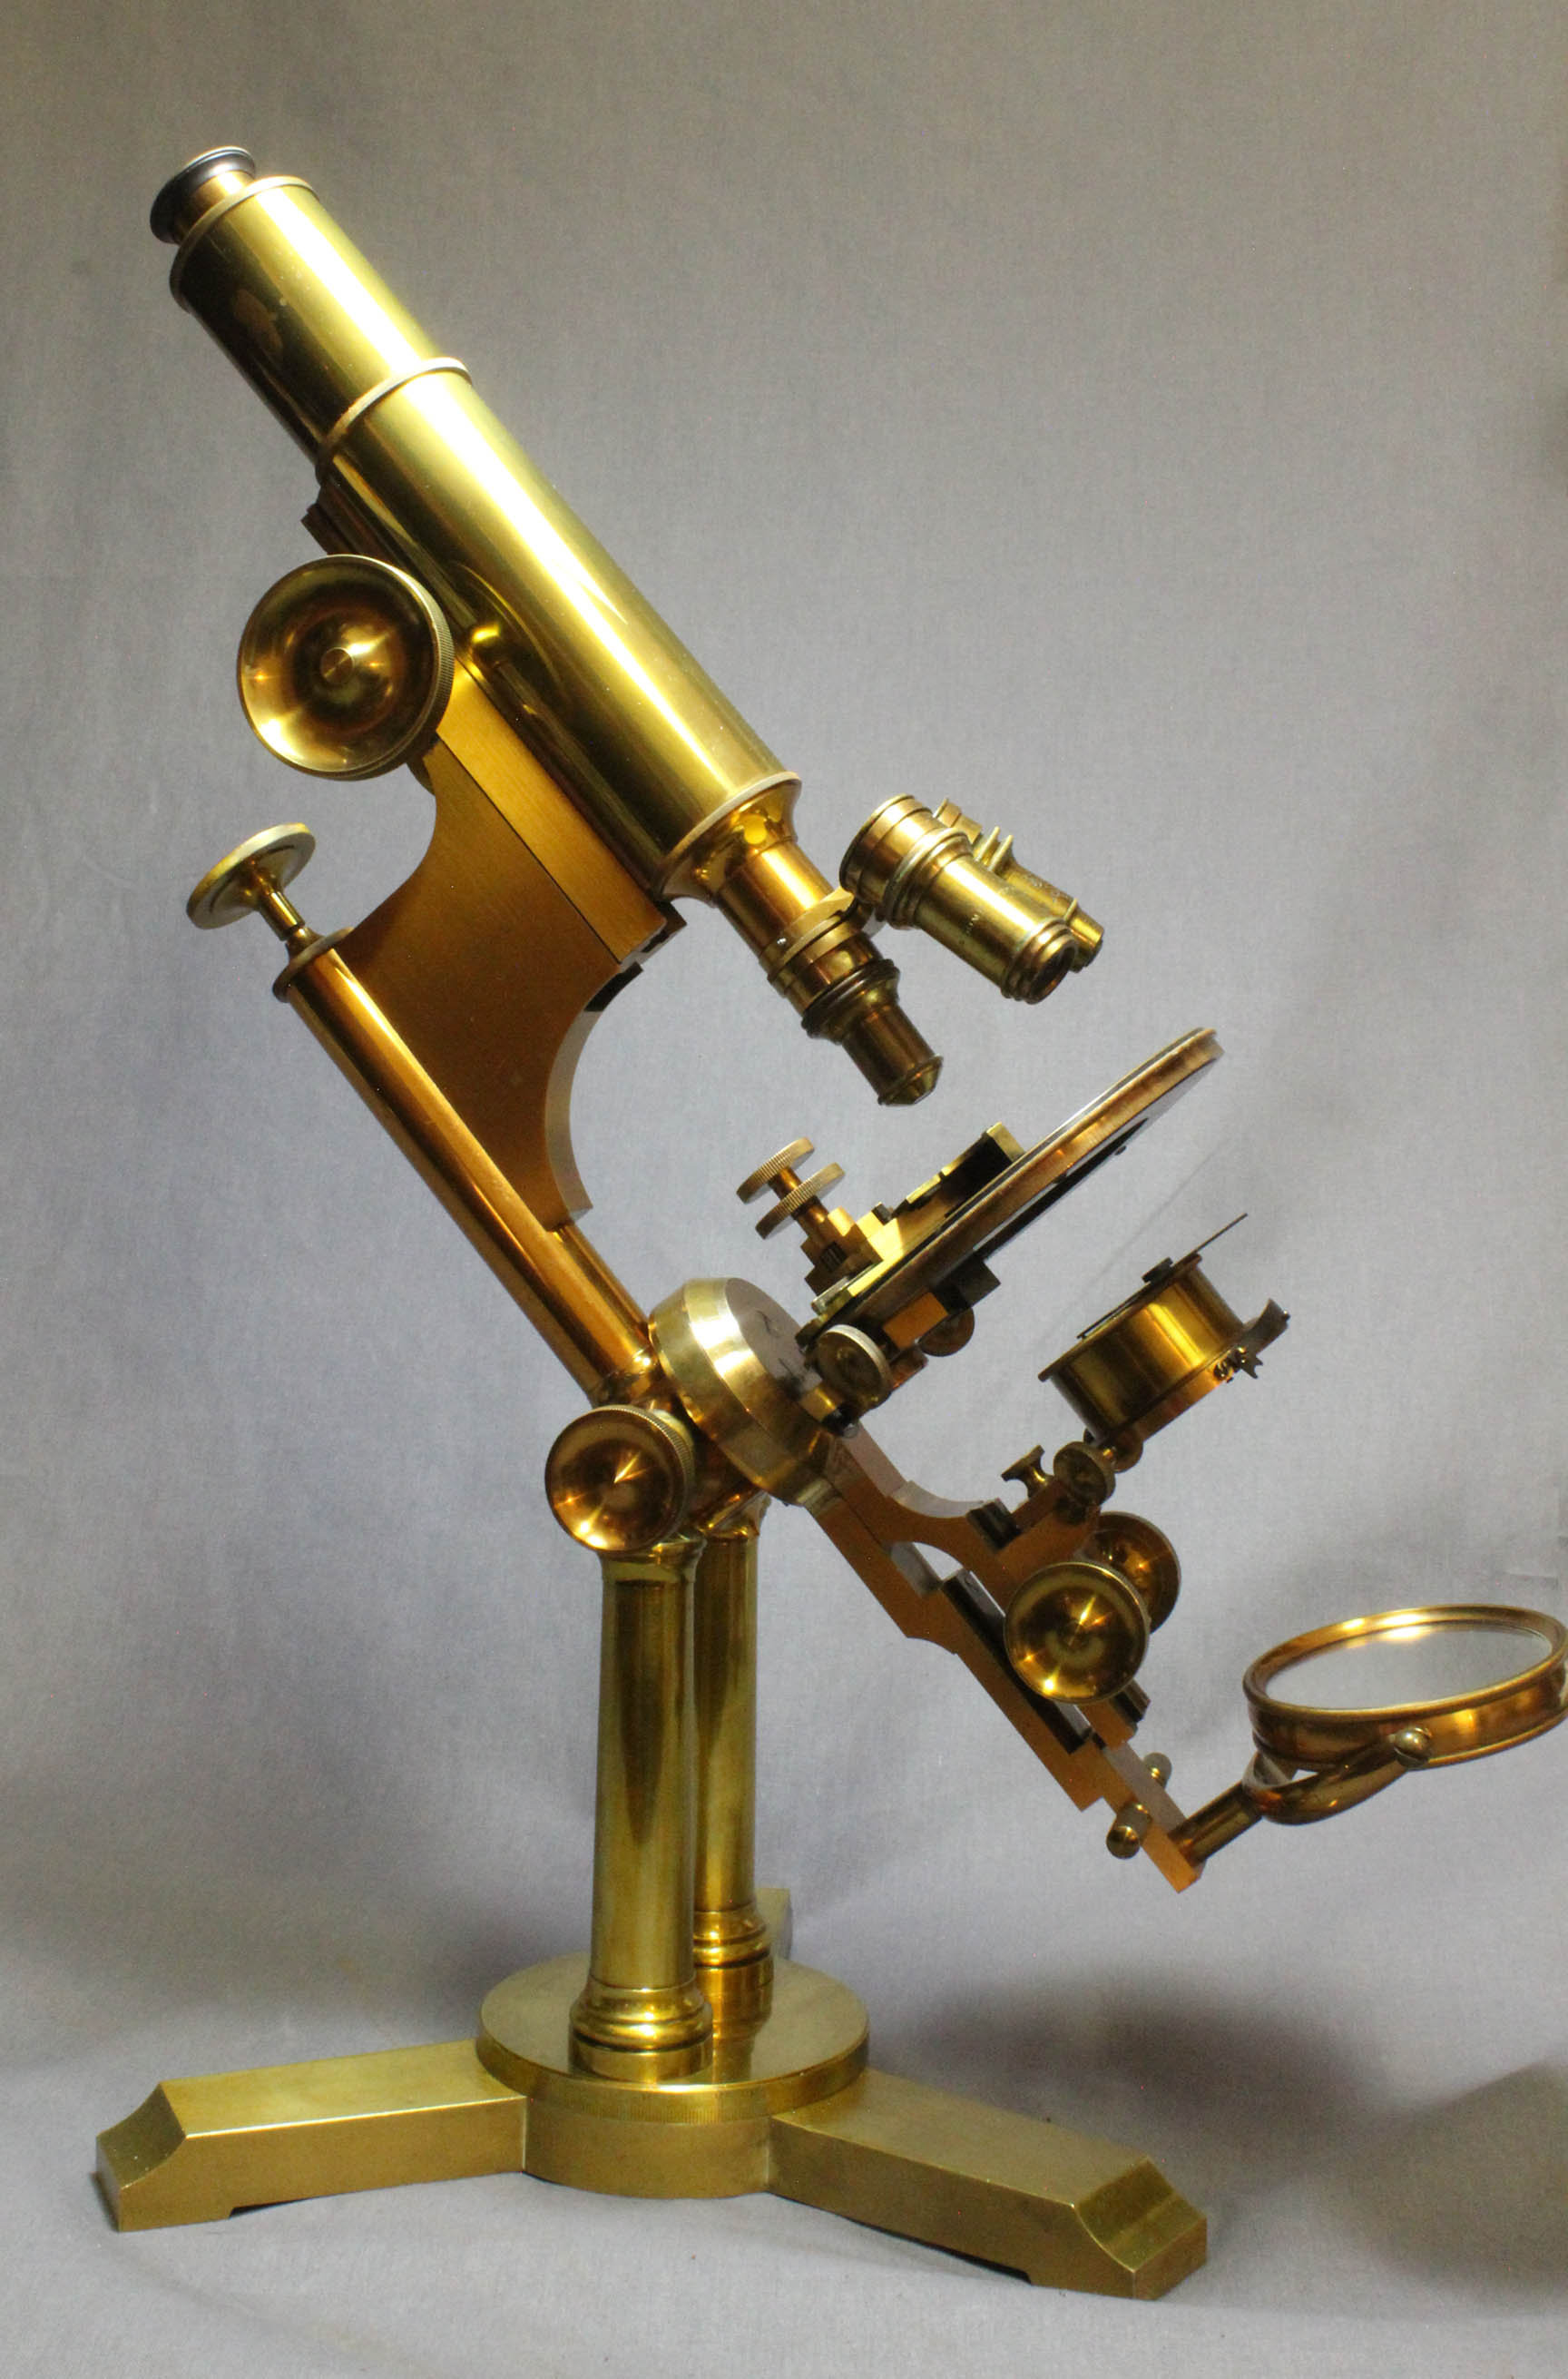 B and L Professional Microscope